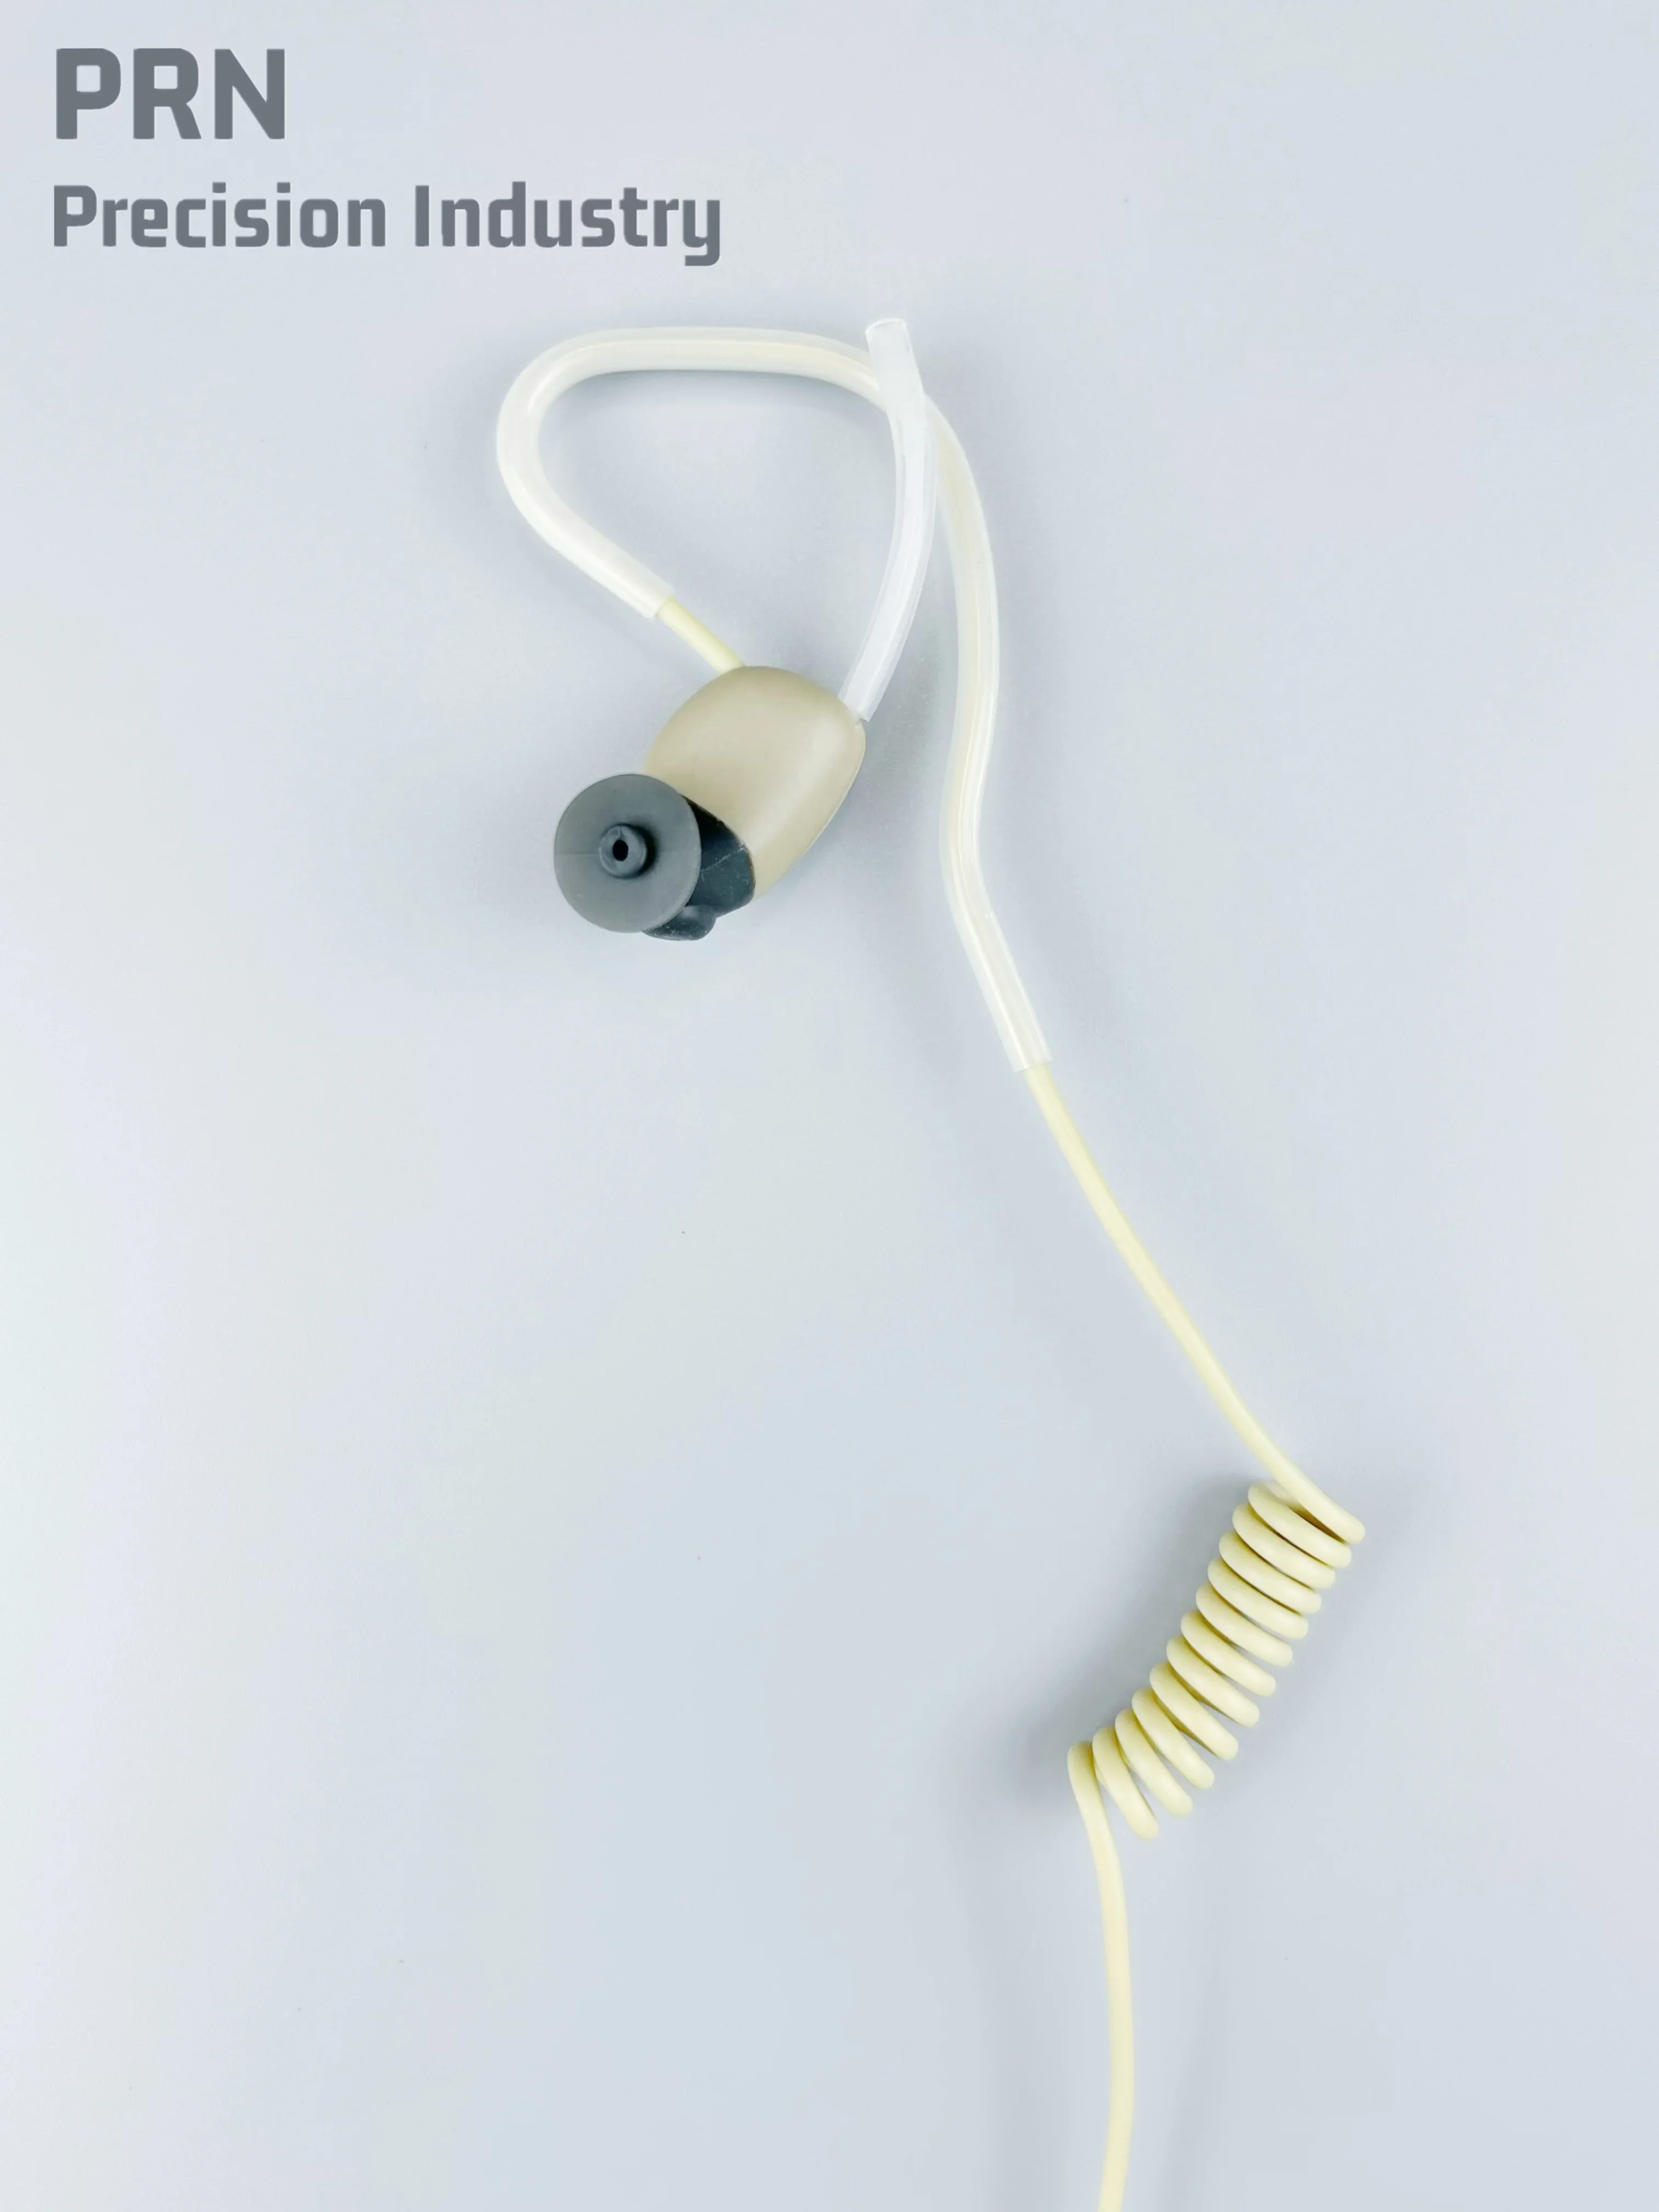 Ушите Seiko INVISIO M3 с костна проводимост с пясъчен цвят с четырехсекционным приставка адаптер Изображение 1